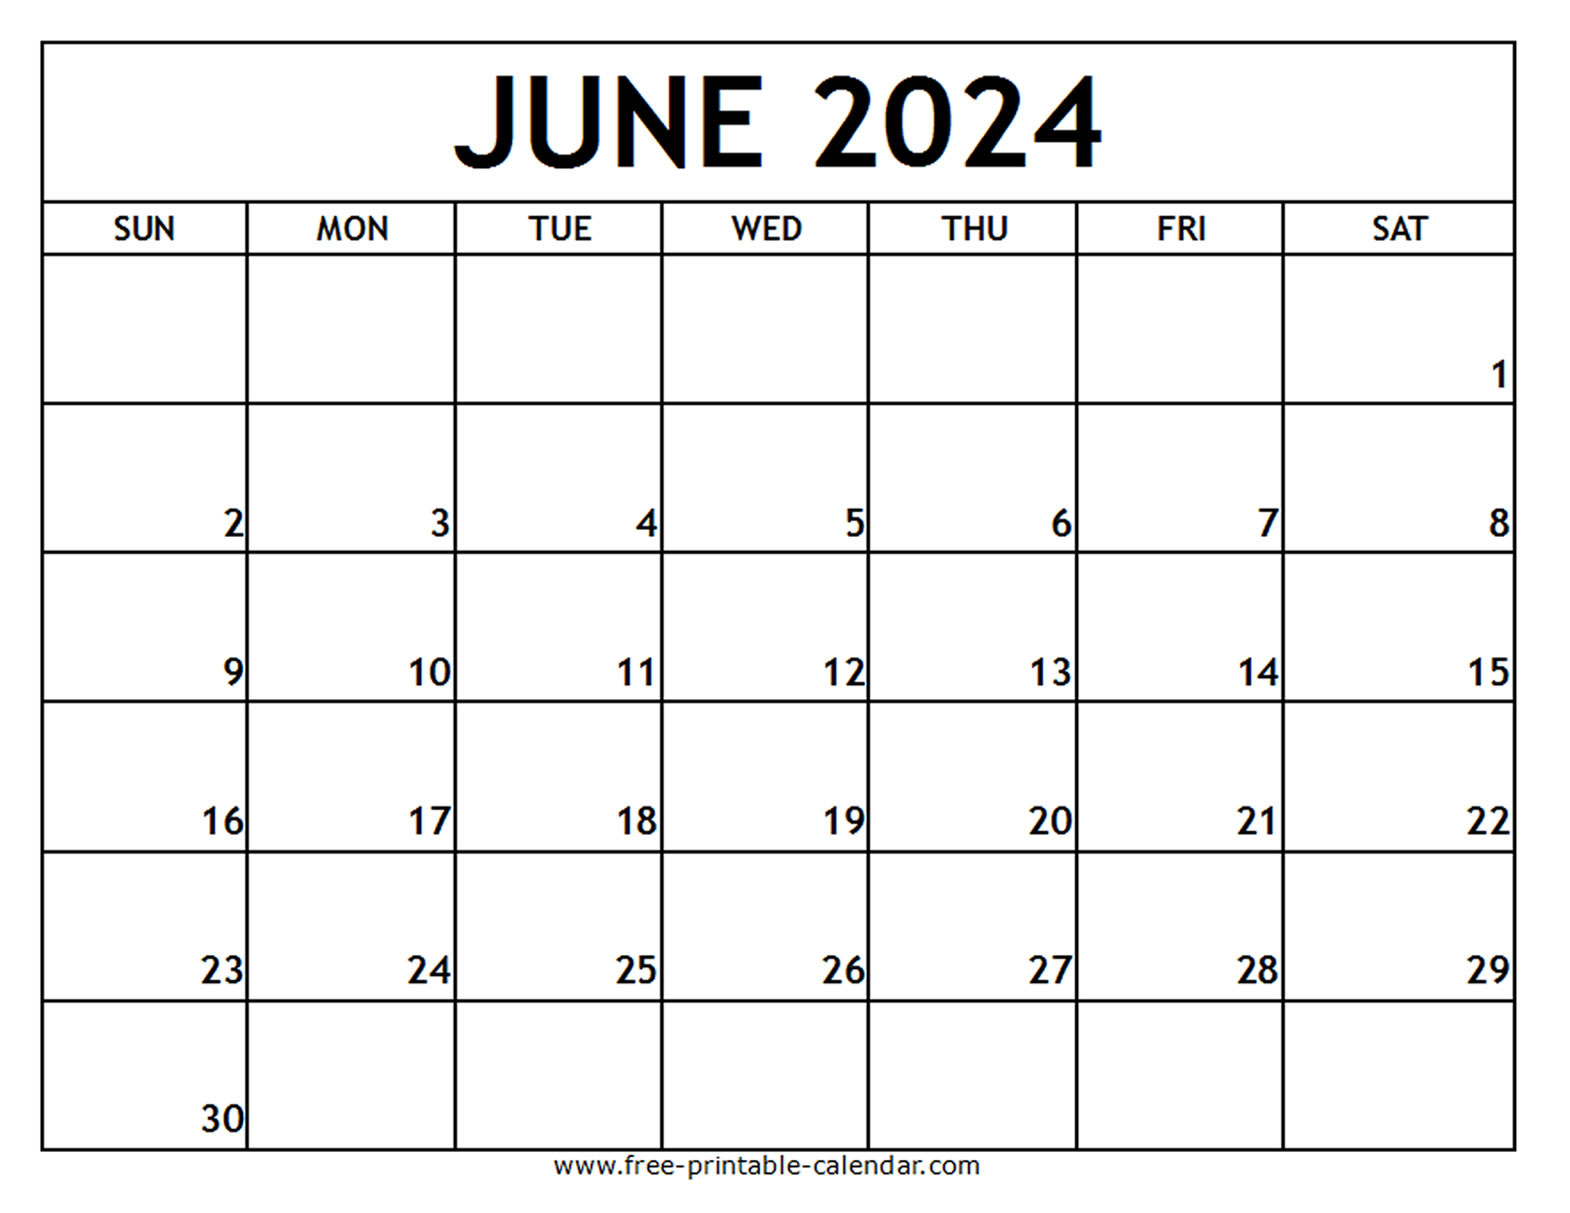 June 2024 Printable Calendar - Free-Printable-Calendar within Free Calendar Template June 2024